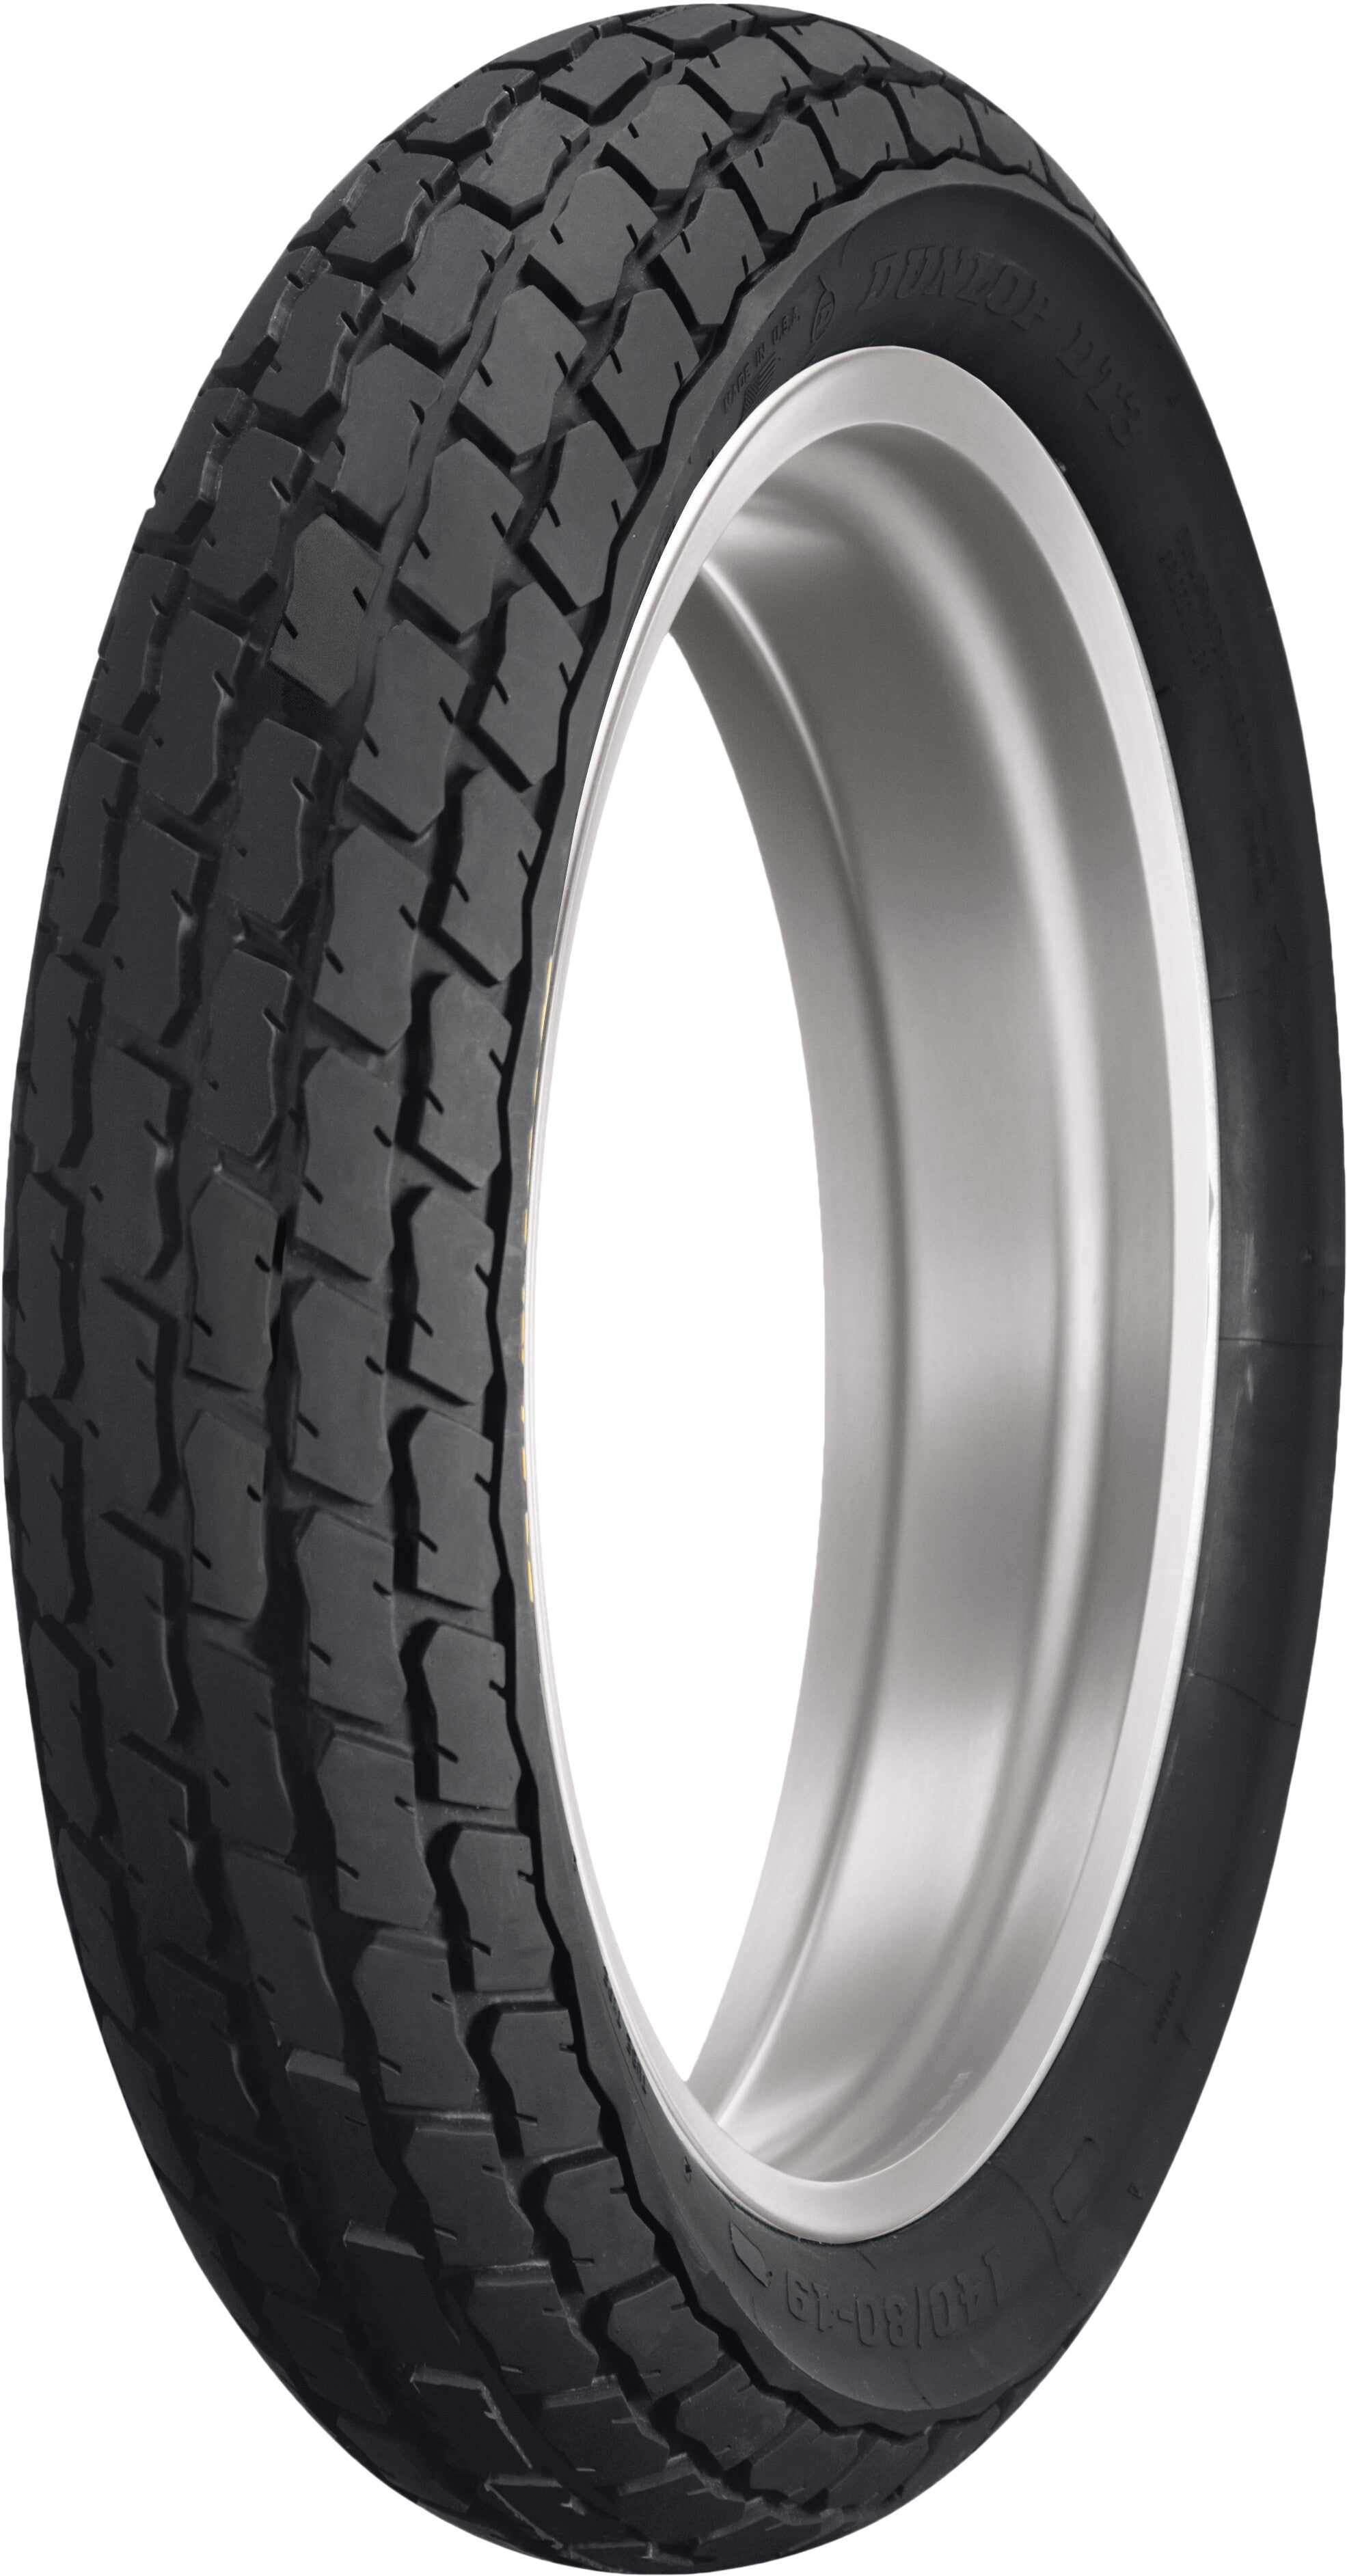 DUNLOP K180A Flat Track Rear Tire (140/80-19)